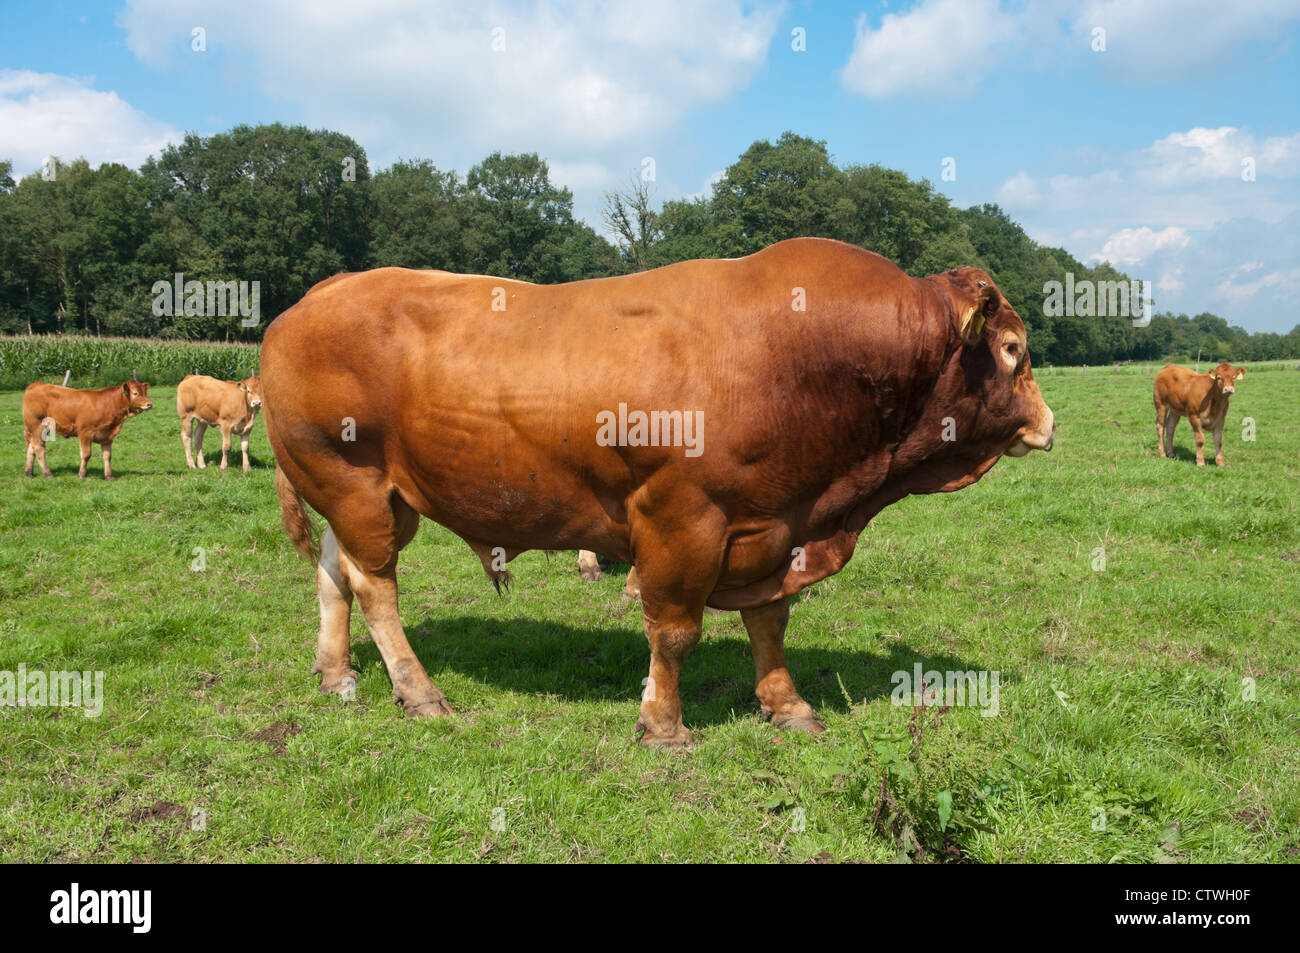 very impressive limousine bull in a dutch meadow Stock Photo